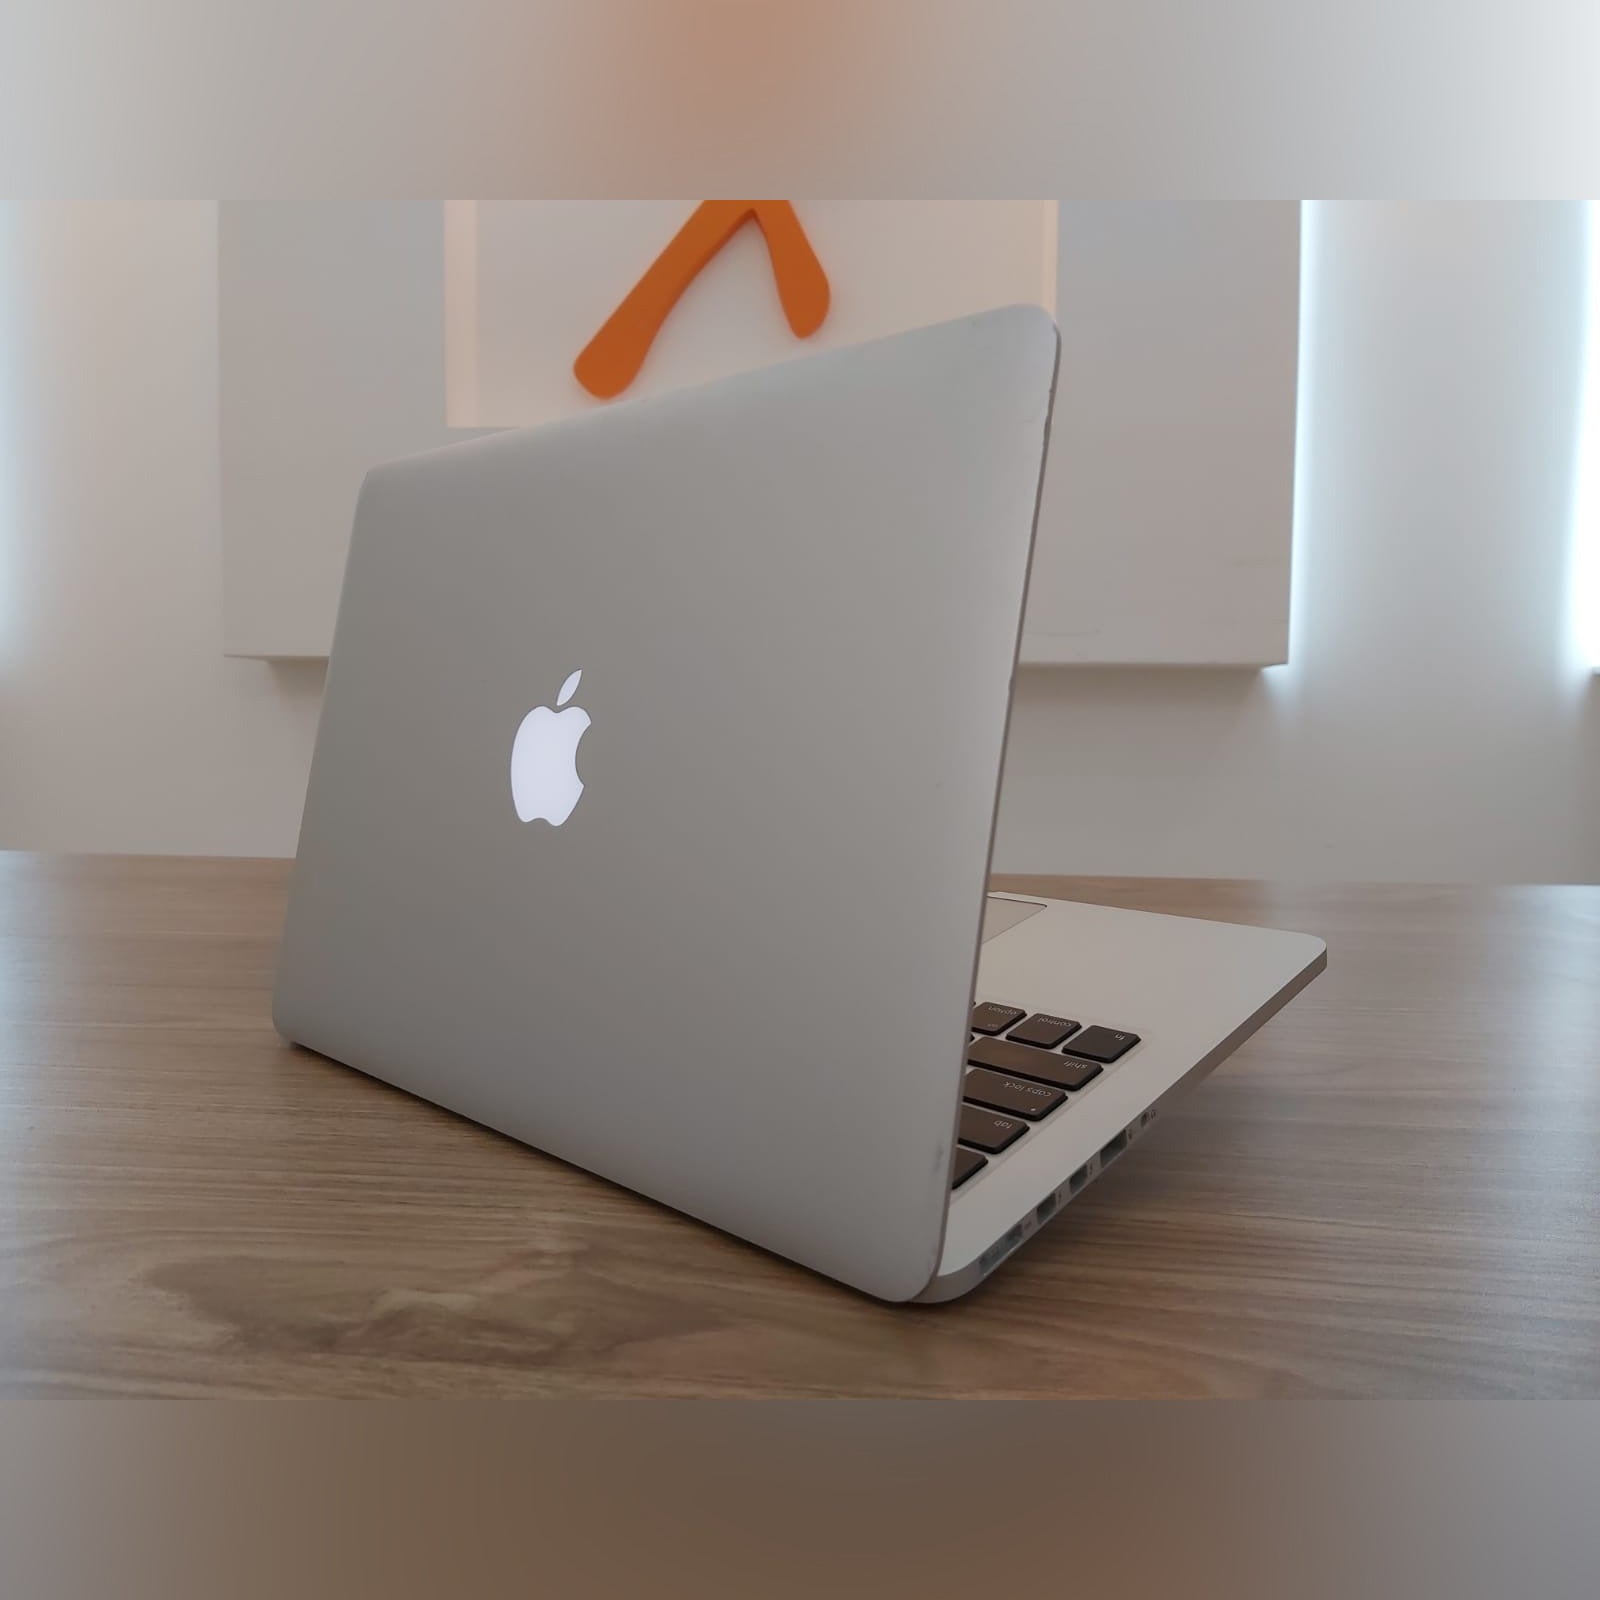 Apple MacBook Pro 13 i7 Laptop (Used Just Like New)